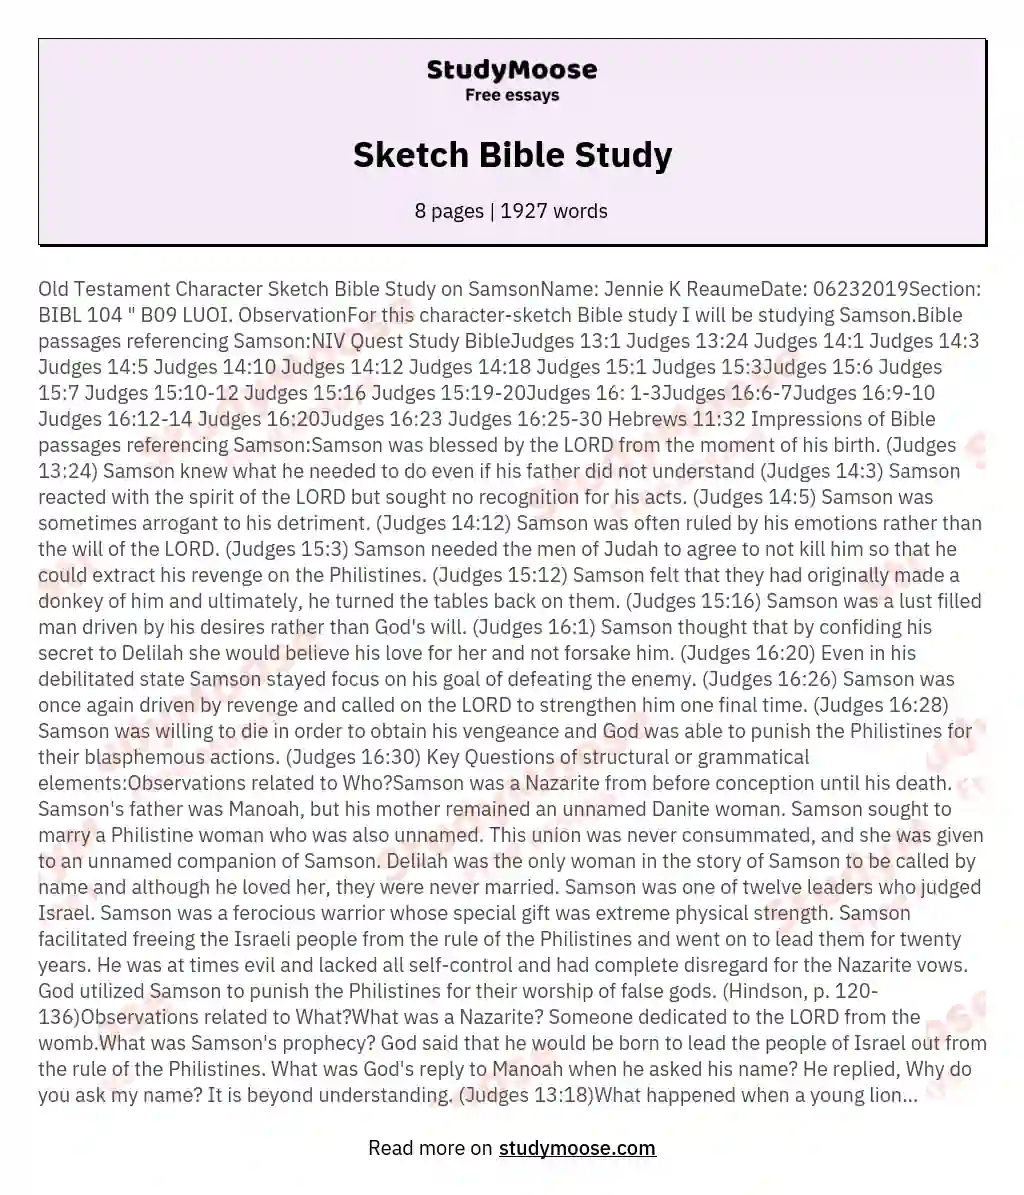 Sketch Bible Study essay